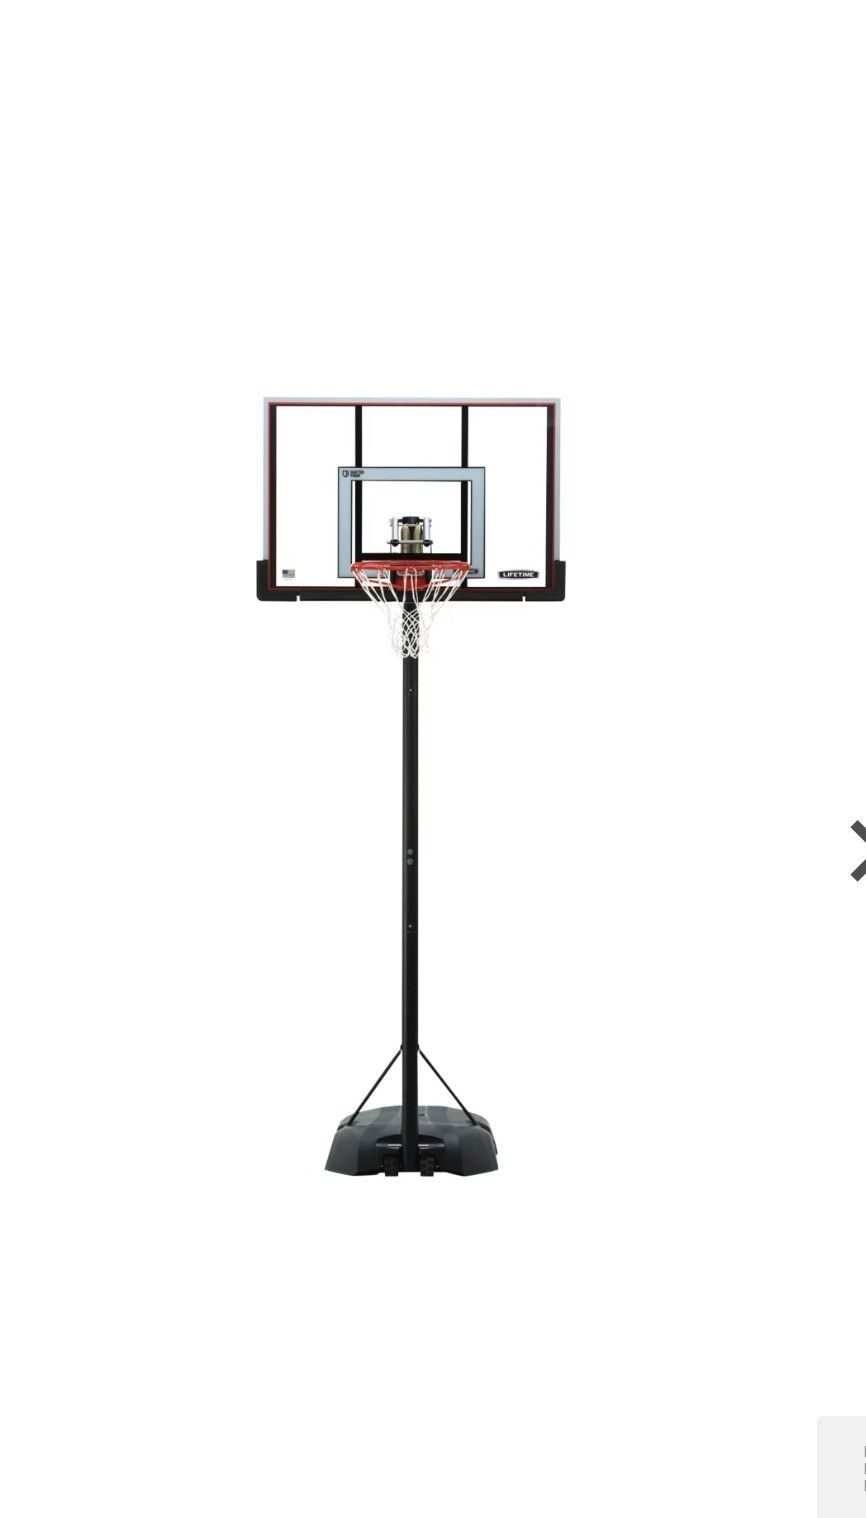 **Brand New** Lifetime Basketball Hoop 50 Inch 